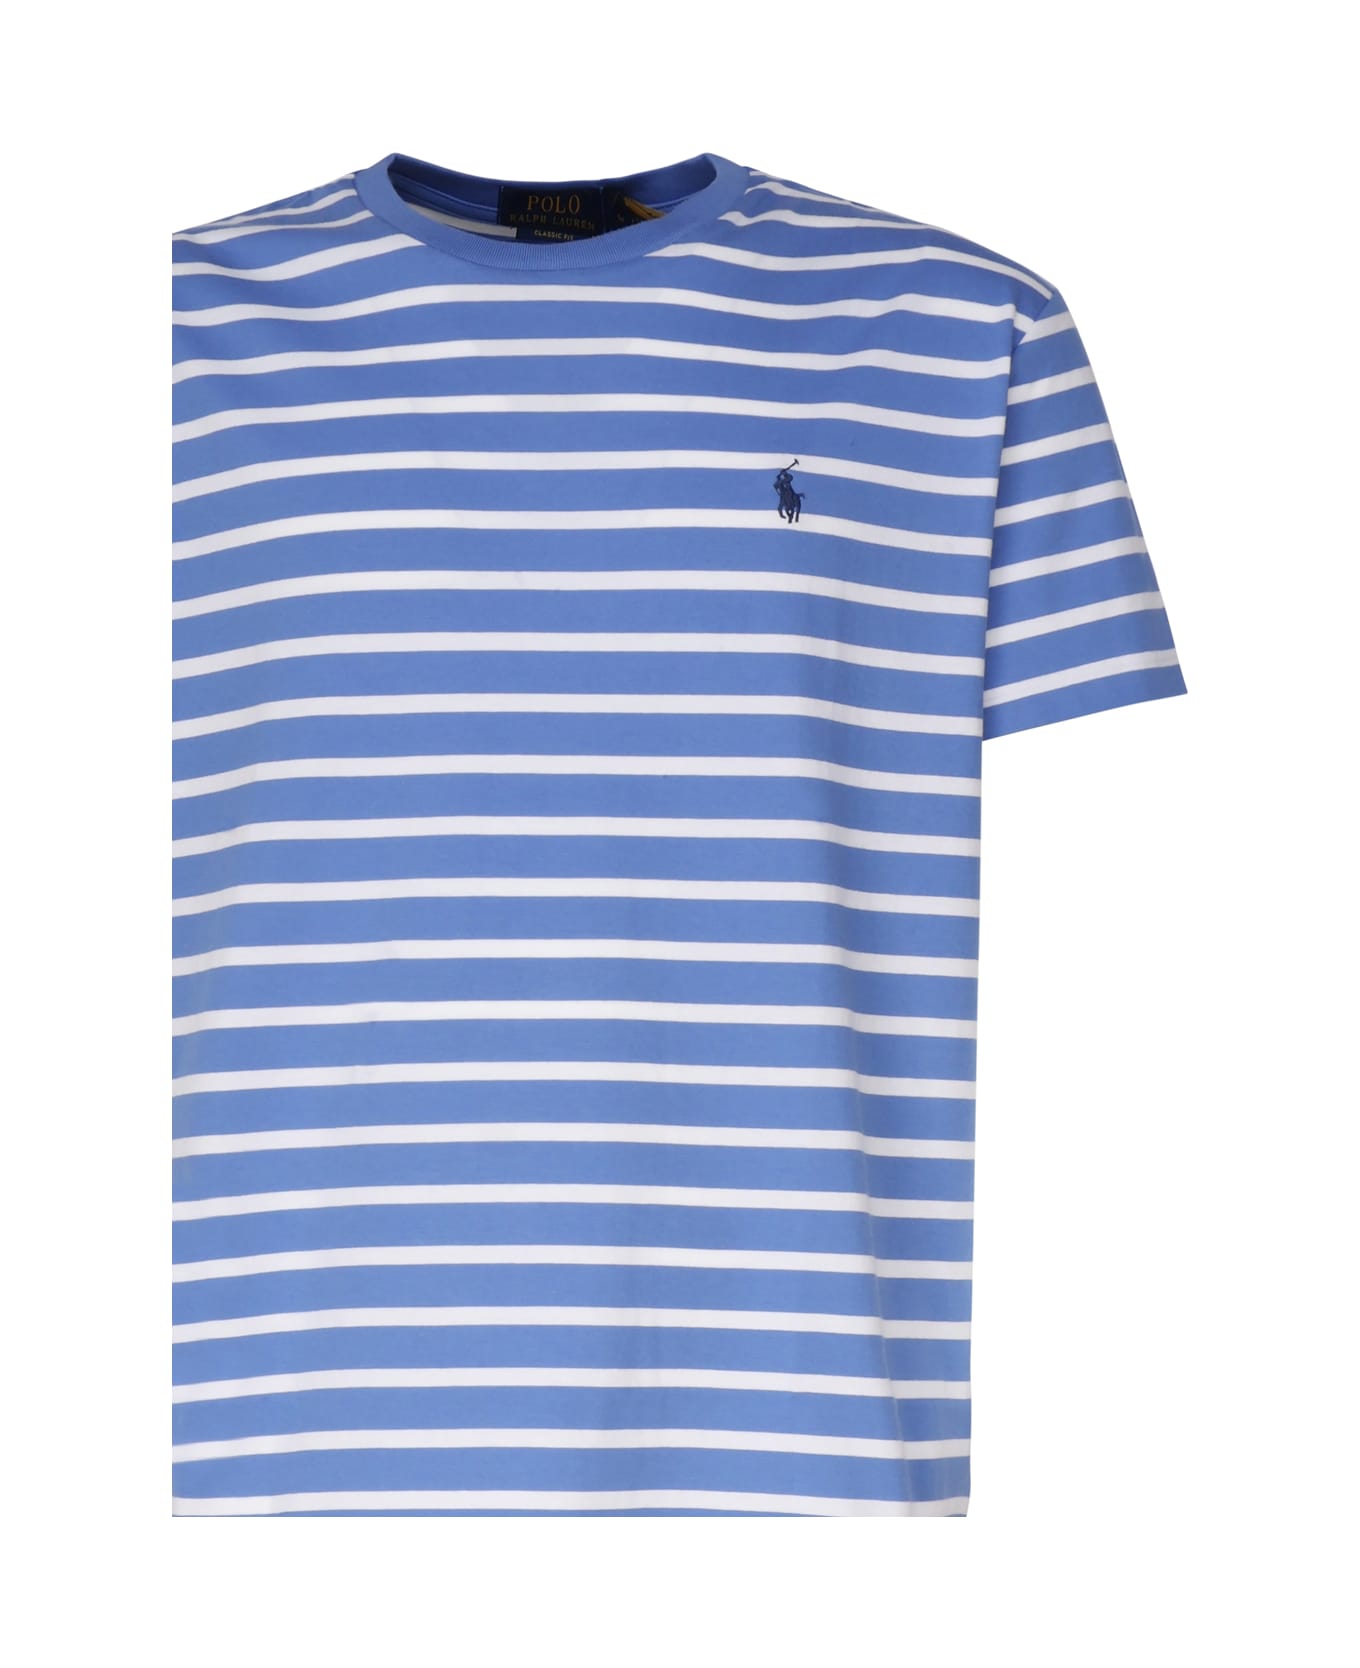 Polo Ralph Lauren Striped T-shirt - Light blue, white